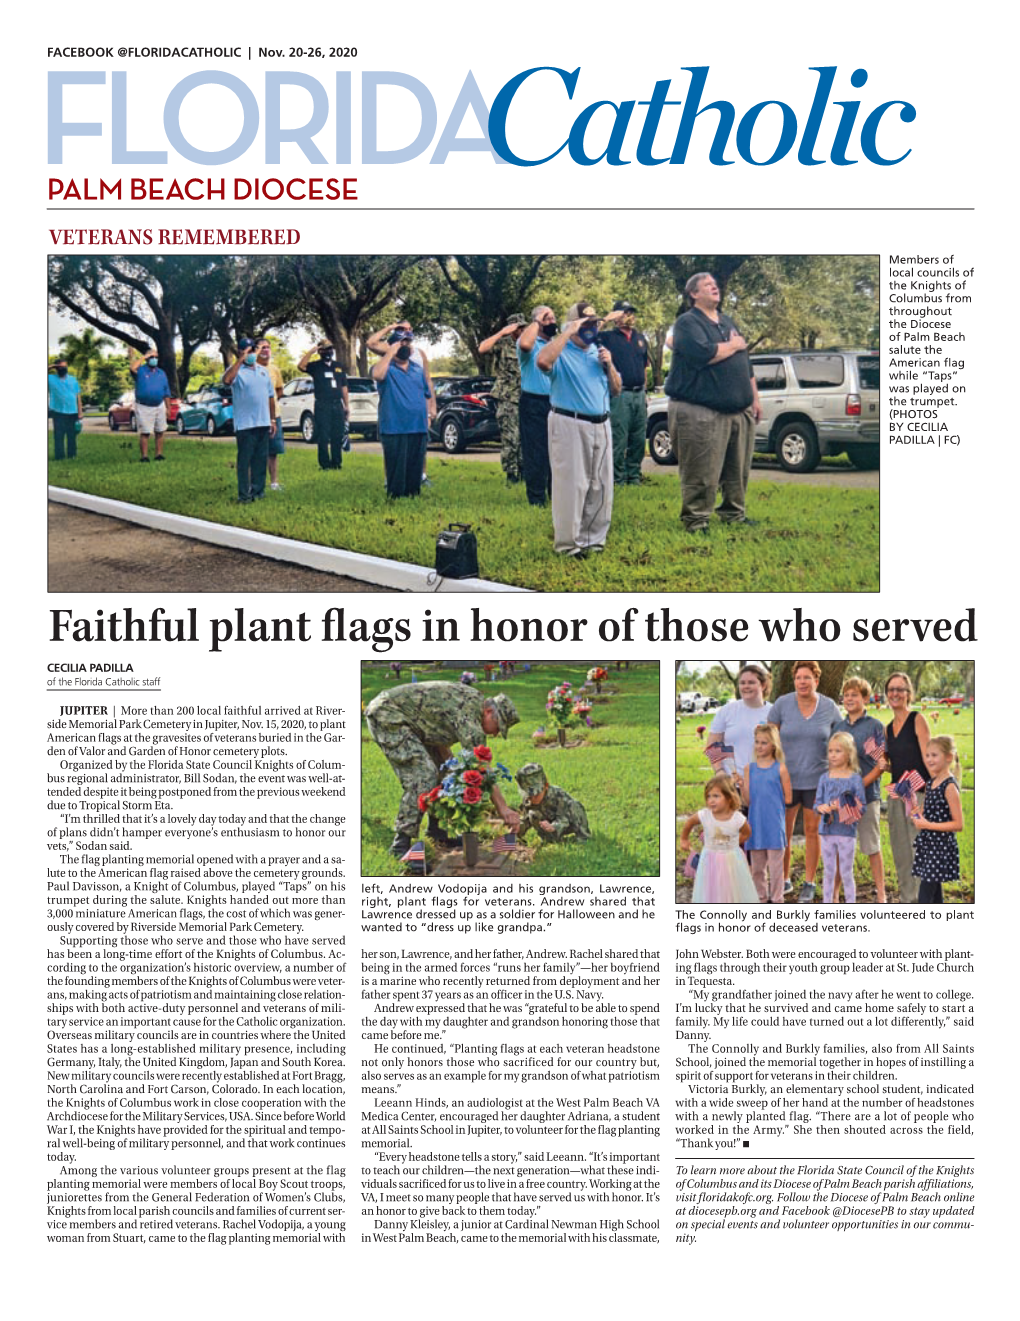 Faithful Plant Flags in Honor of Those Who Served CECILIA PADILLA of the Florida Catholic Staff